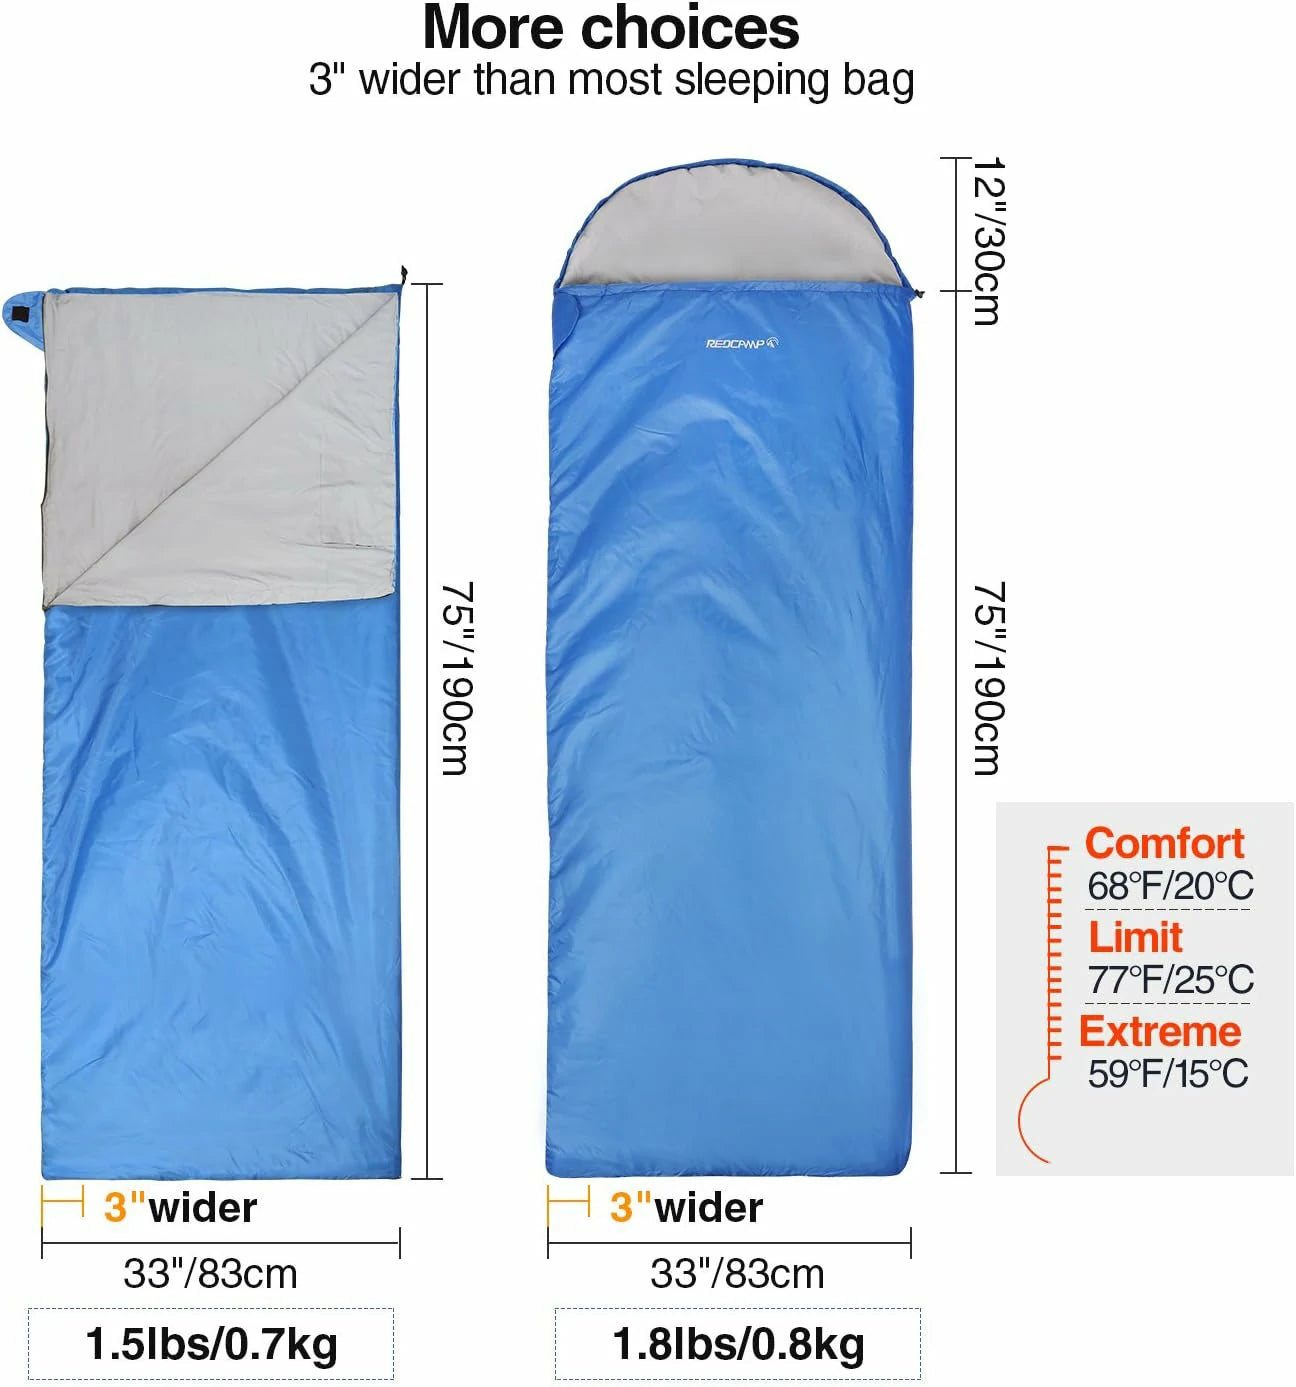 REDCAMP Ultra Lightweight Sleeping Bag for Backpacking